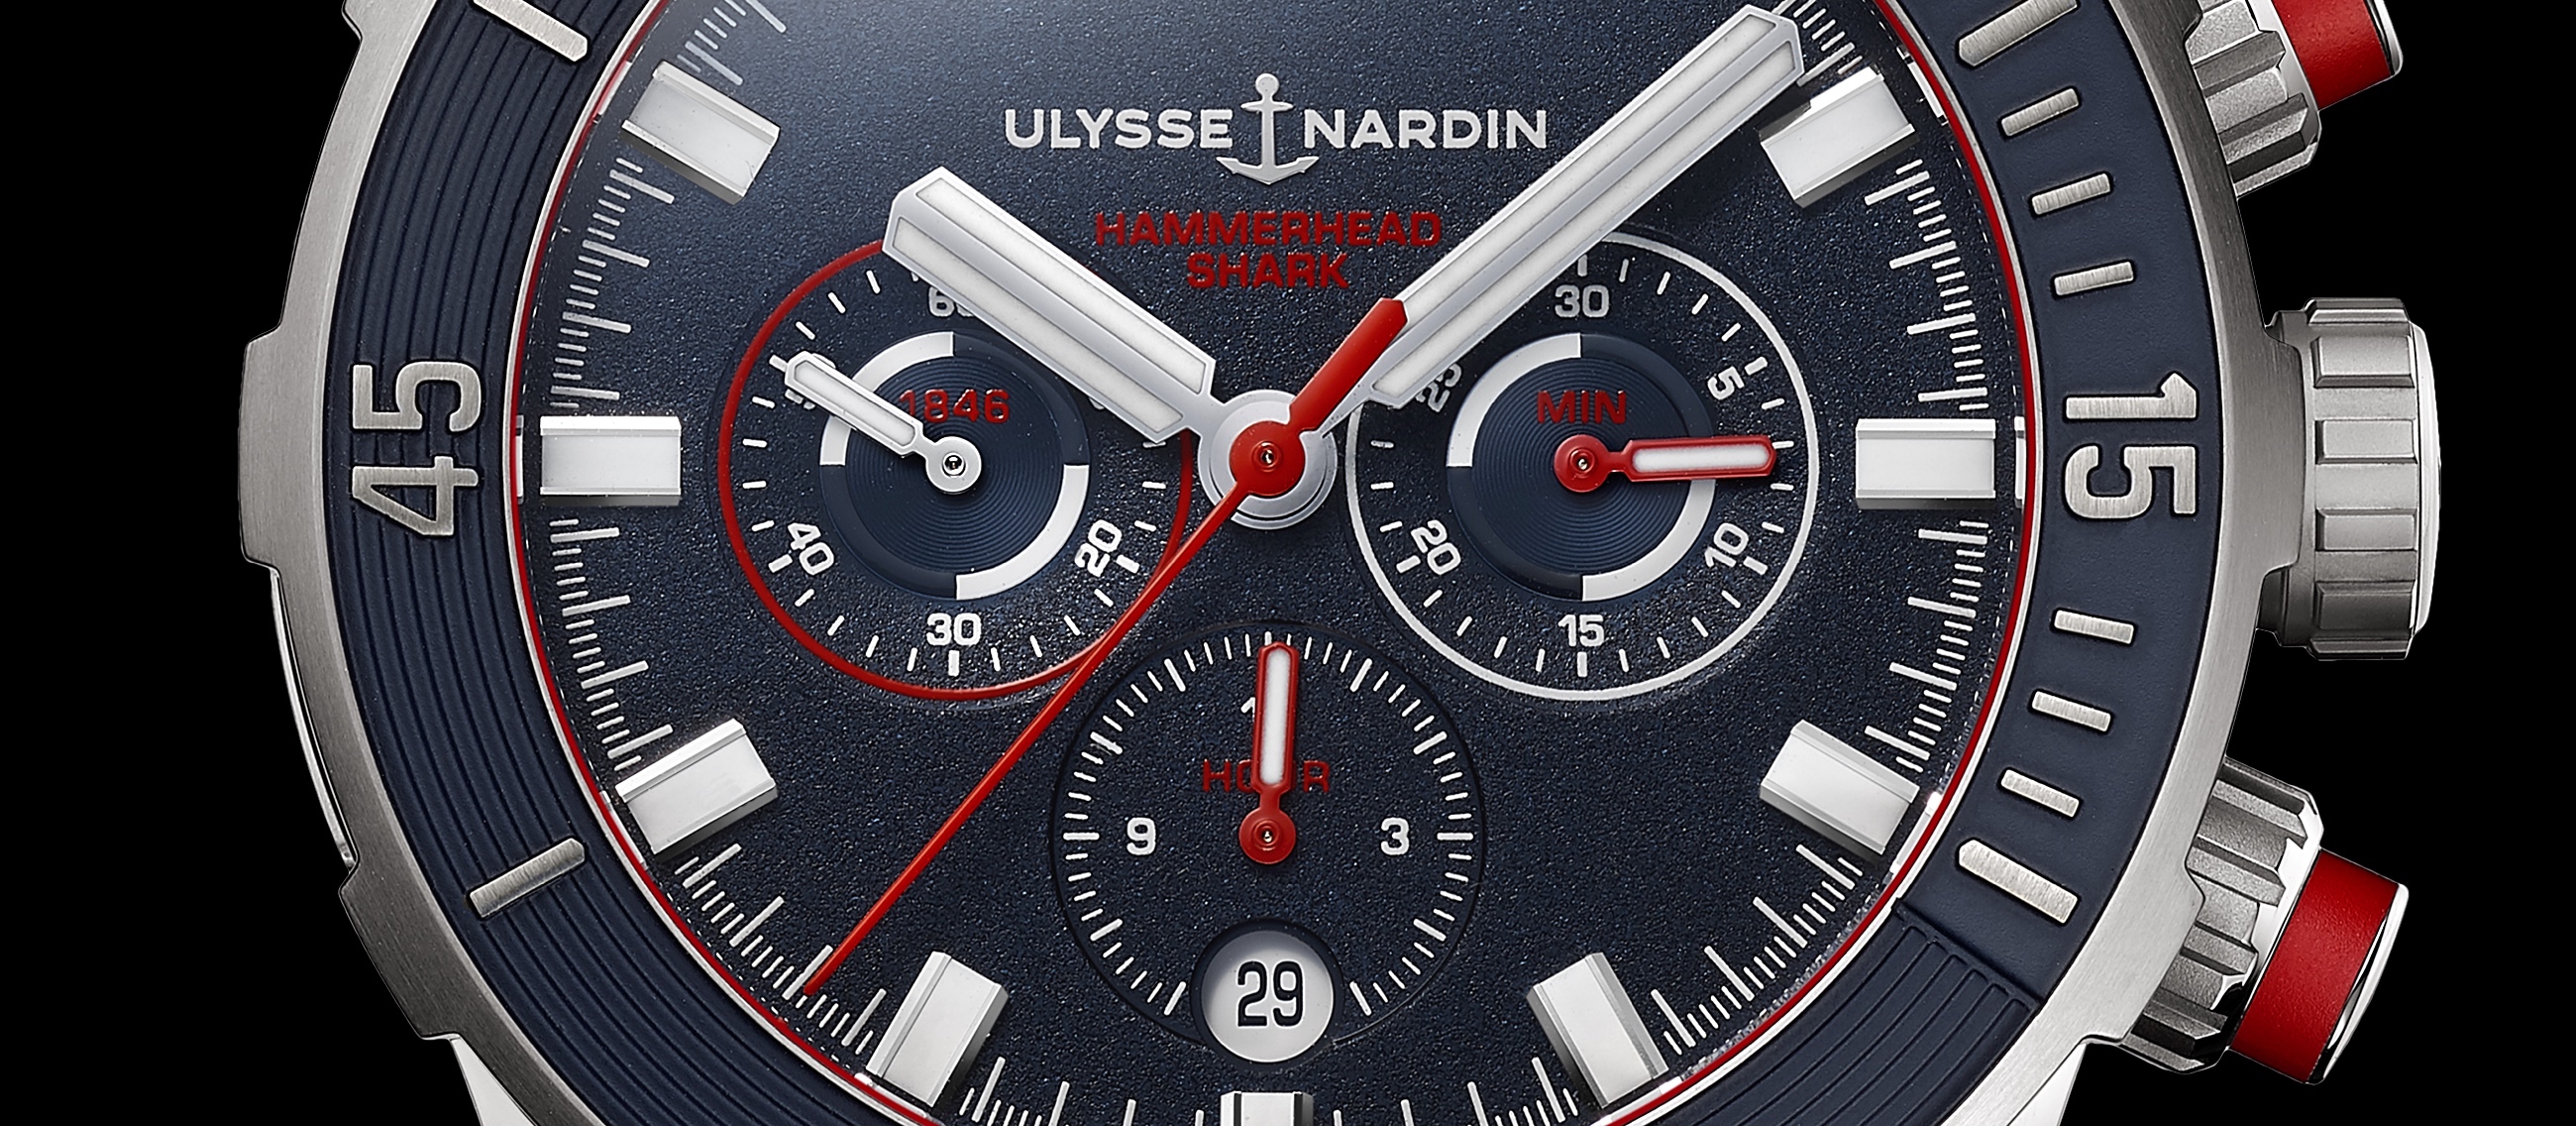 Ulysse Nardin Diver Chronograph Hammerhead Shark Limited Edition - cover